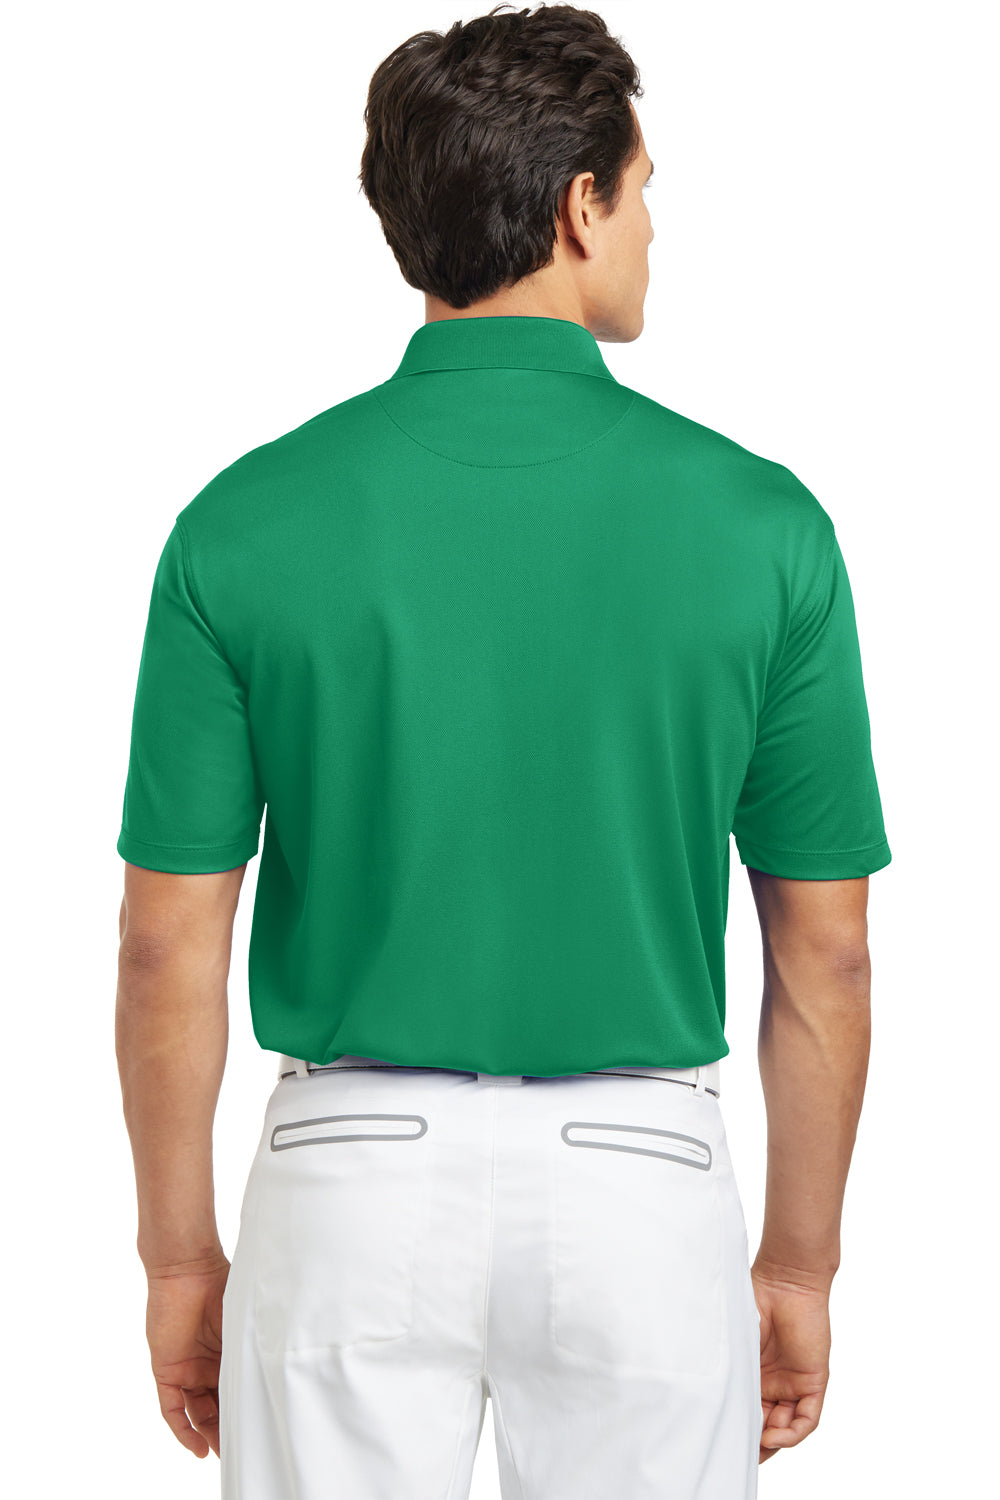 Nike 203690 Mens Tech Basic Dri-Fit Moisture Wicking Short Sleeve Polo Shirt Lucky Green Model Back